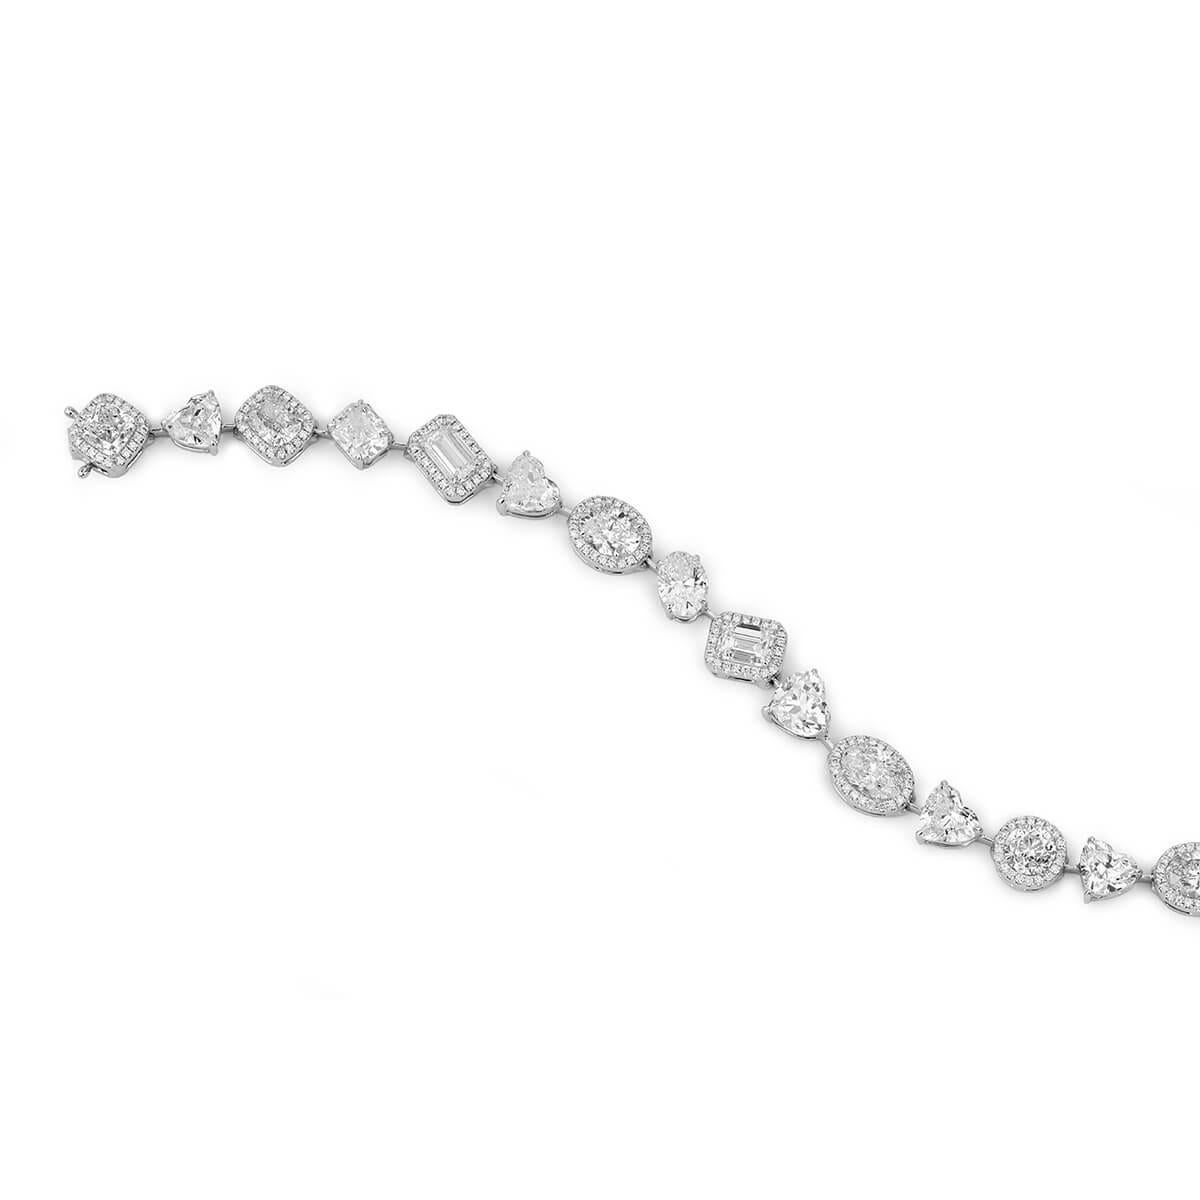 Women's or Men's GIA Certified Mixed Cut Diamond Bracelet, 18.59 Carat